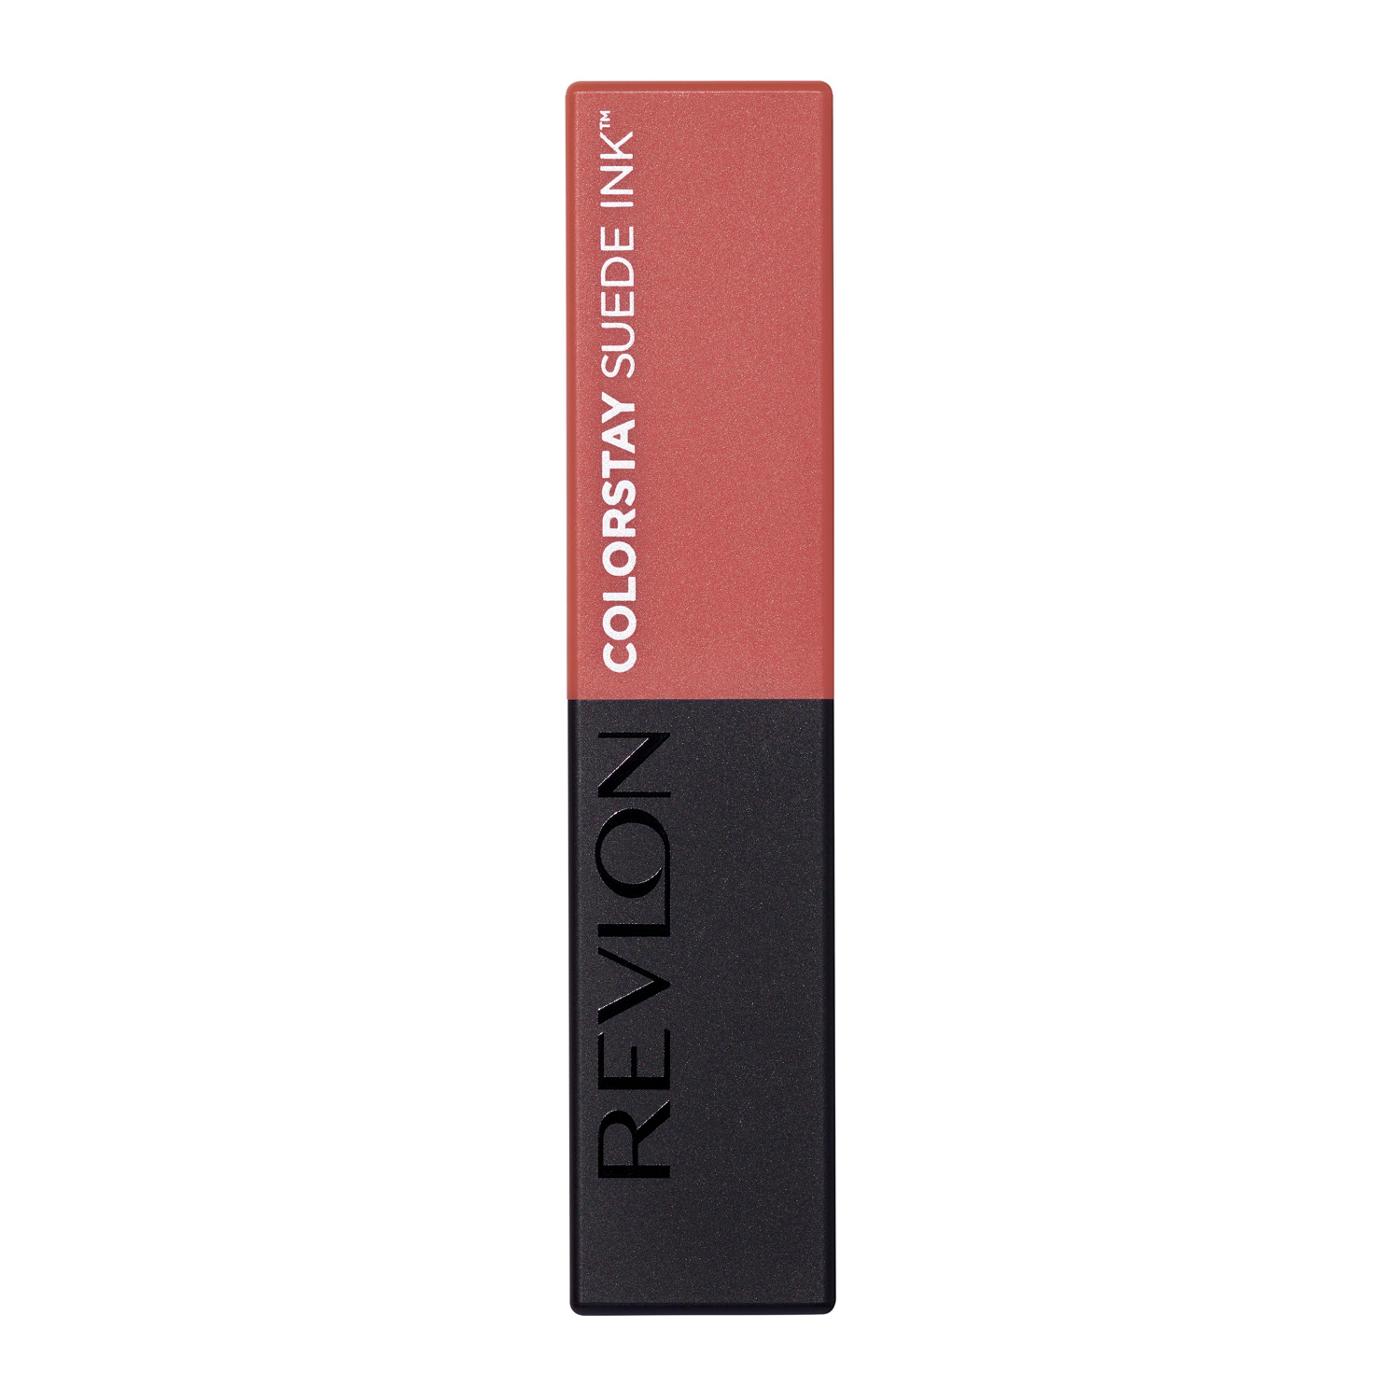 Revlon ColorStay Suede Ink Lipstick - Hot Girl; image 1 of 5